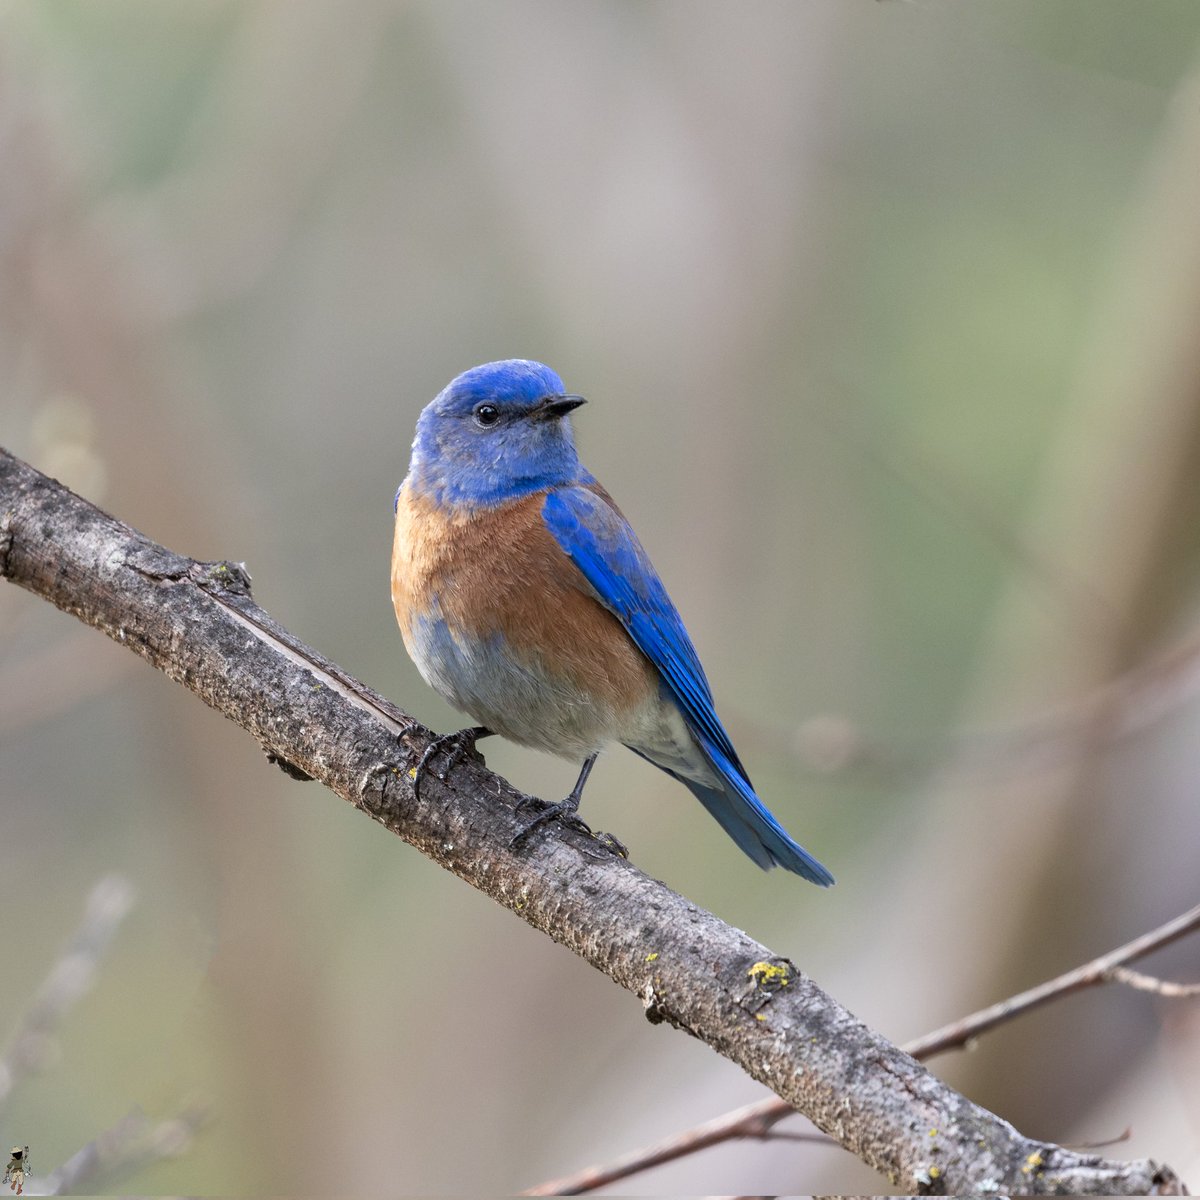 The male Western Bluebird is a round-bellied bird with a rusty orange vest and a blue upper body. That deep blue is stunning!

#bluebird #birds #wildlife #nature #blue #bird #photography #westernbluebird #birding #california